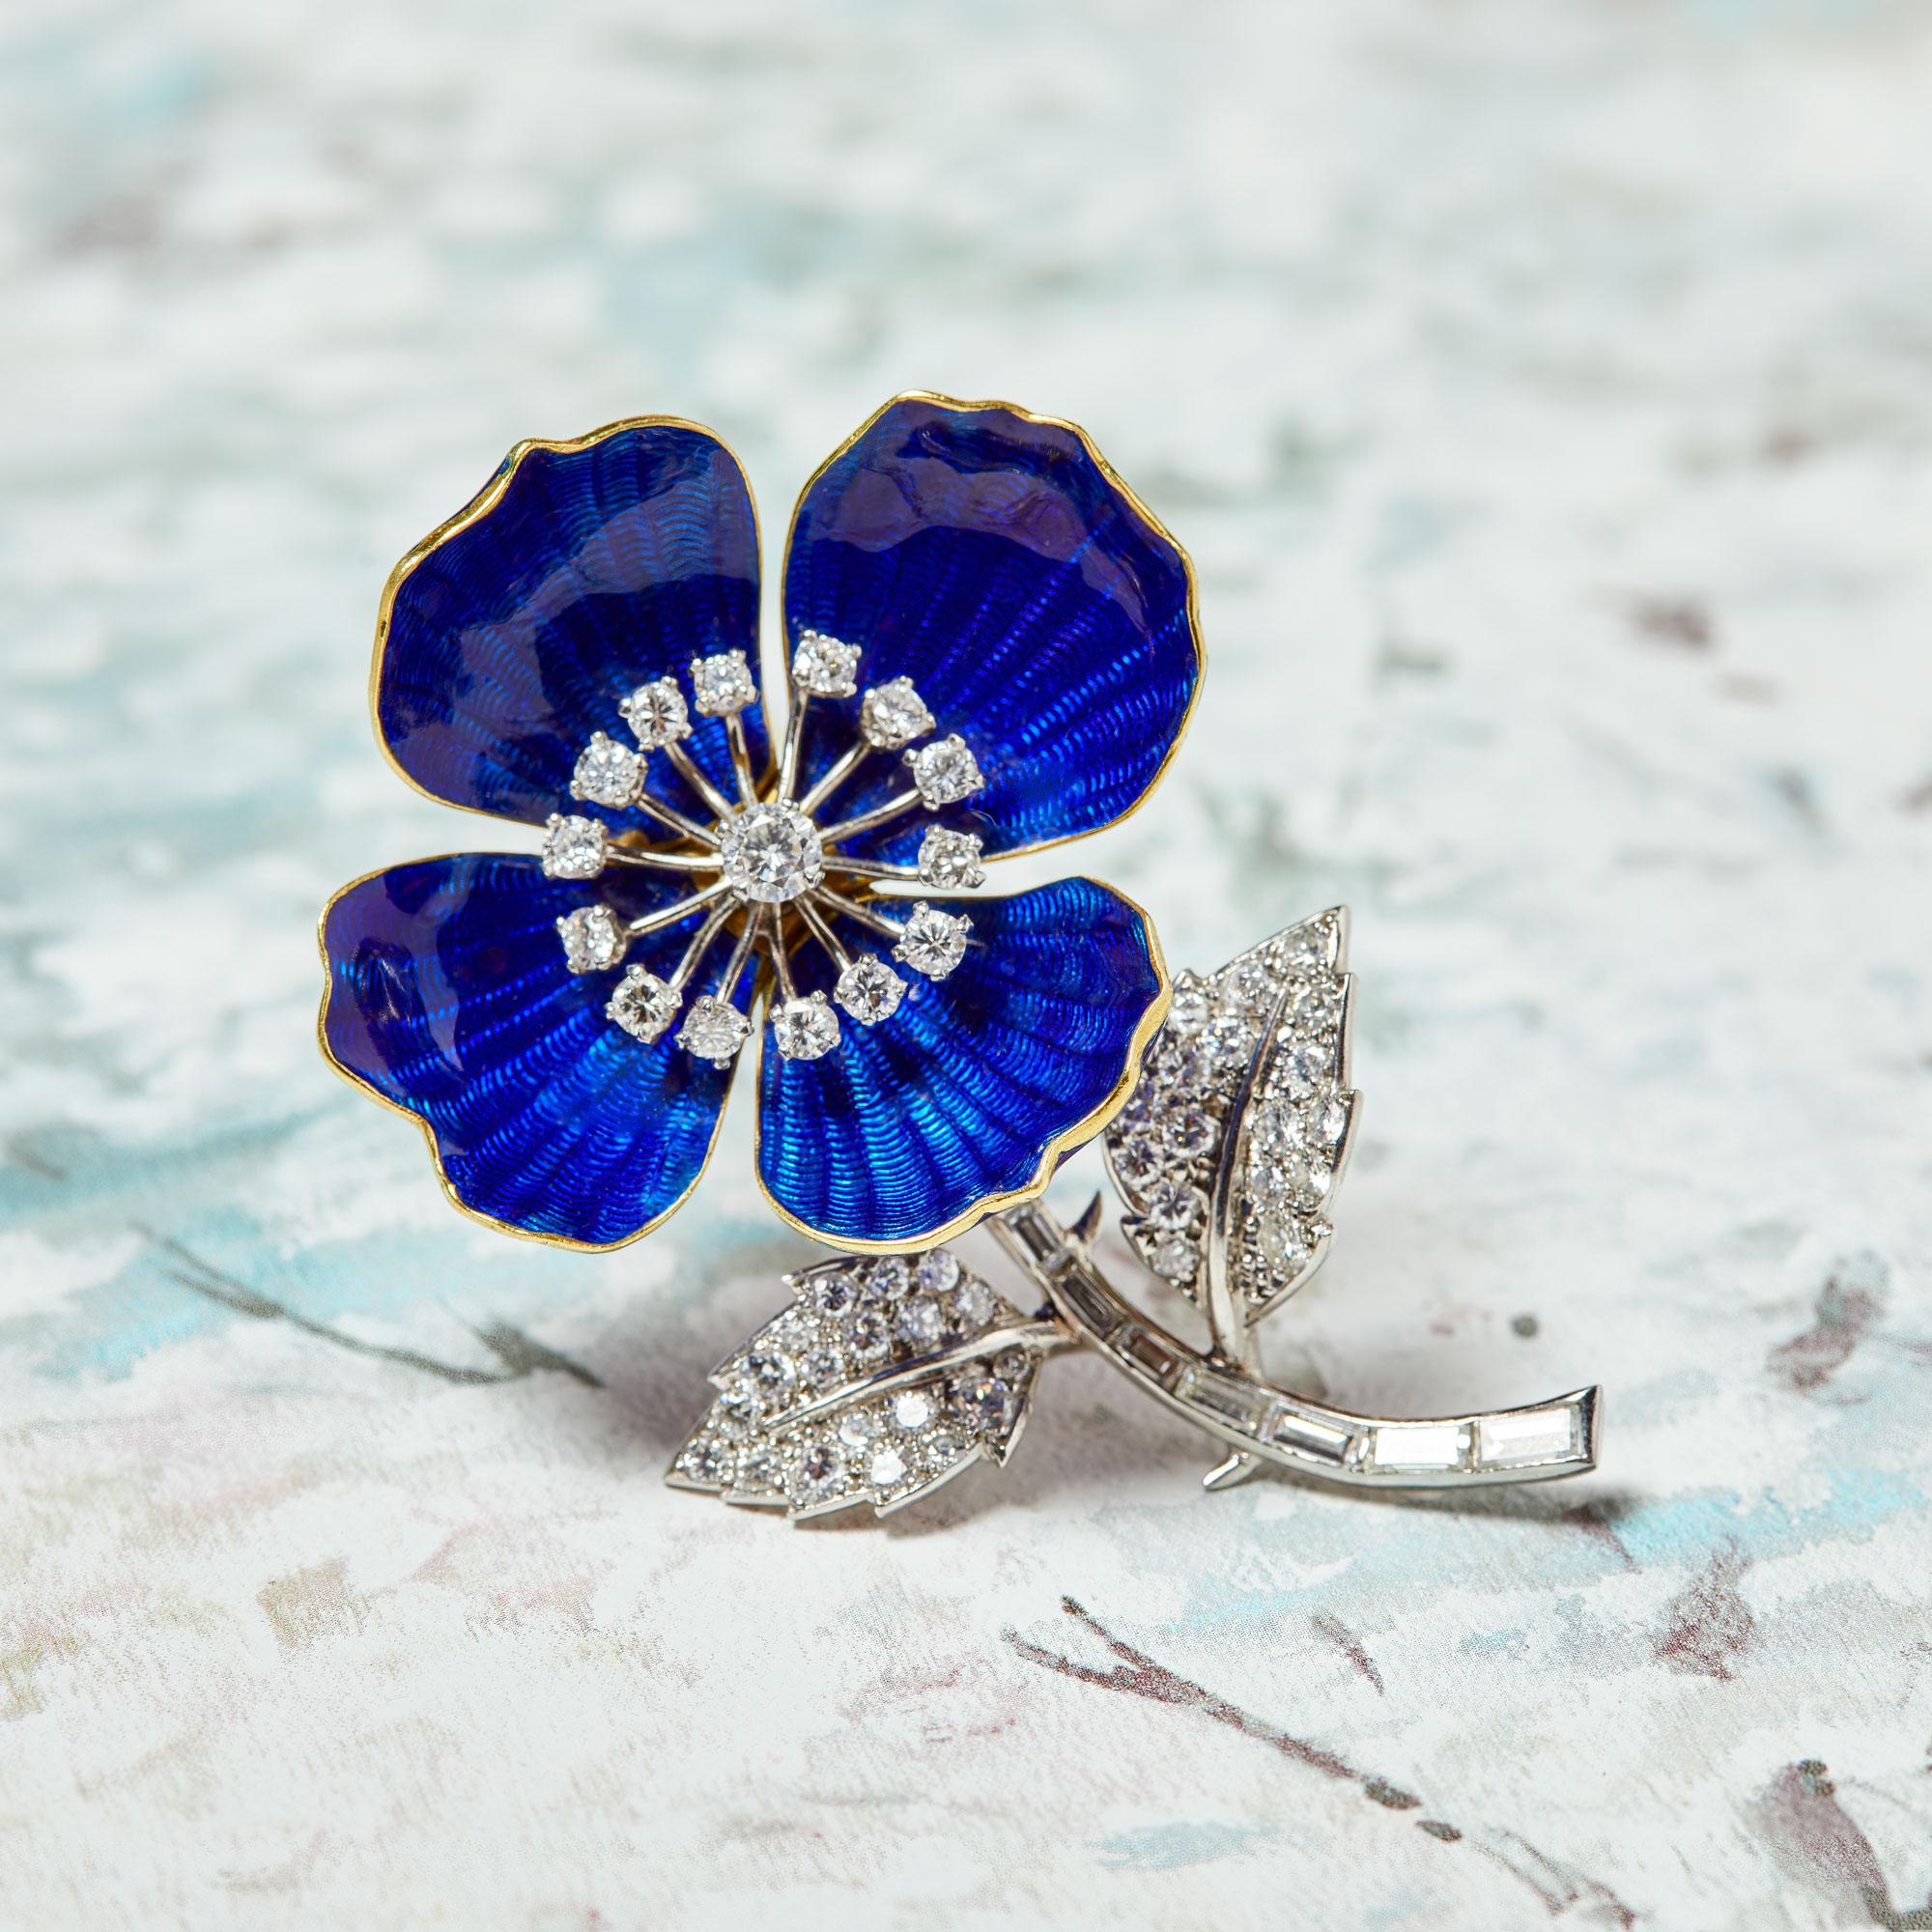 Mixed Cut Boucheron Diamond And Blue Enamel Flower Brooch For Sale